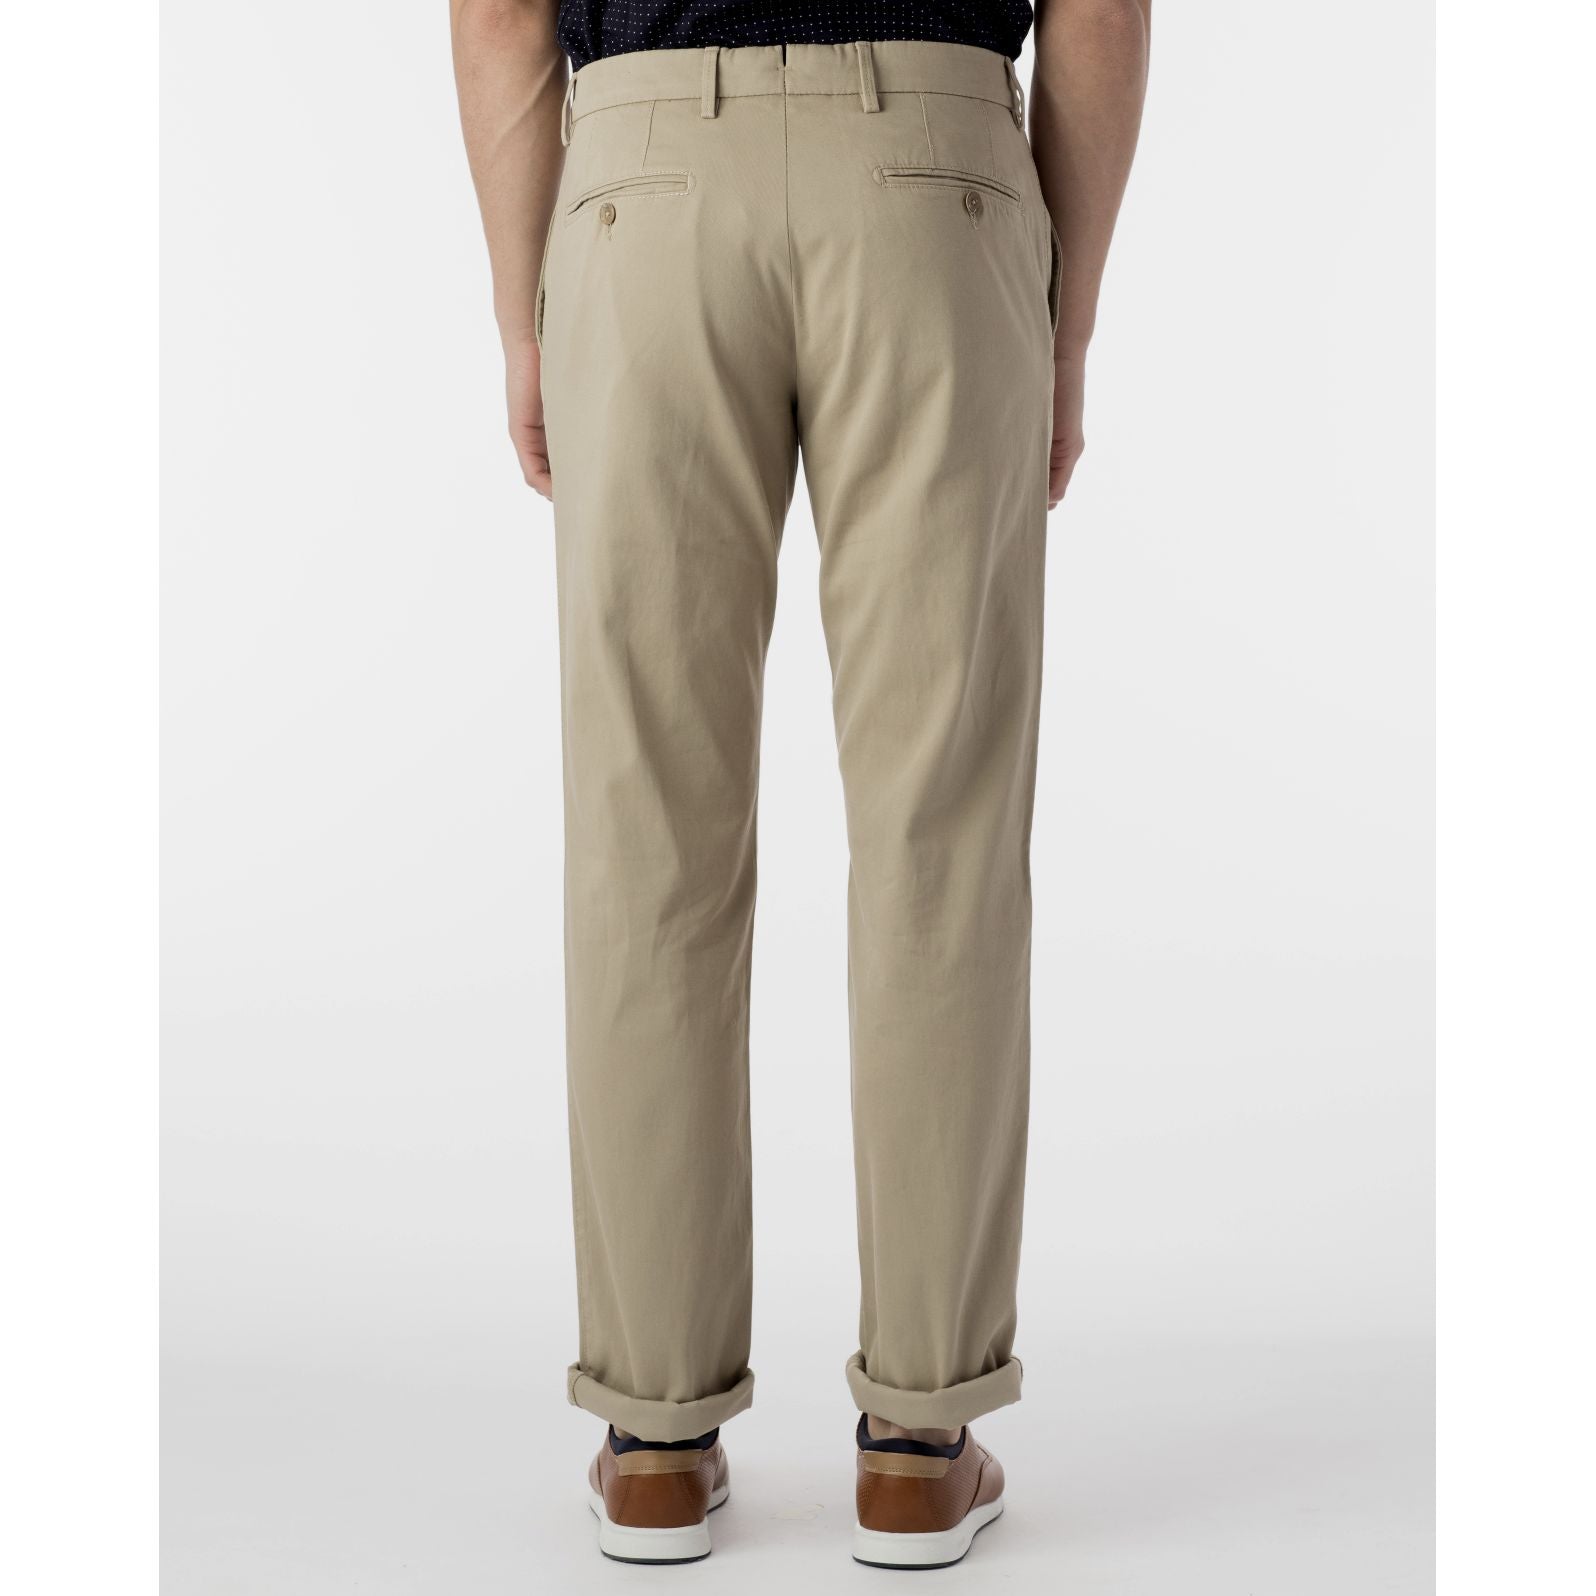 Perma Color Pima Twill Khaki Pants in True Khaki, Size 40 (Atwater Modern Fit) by Ballin